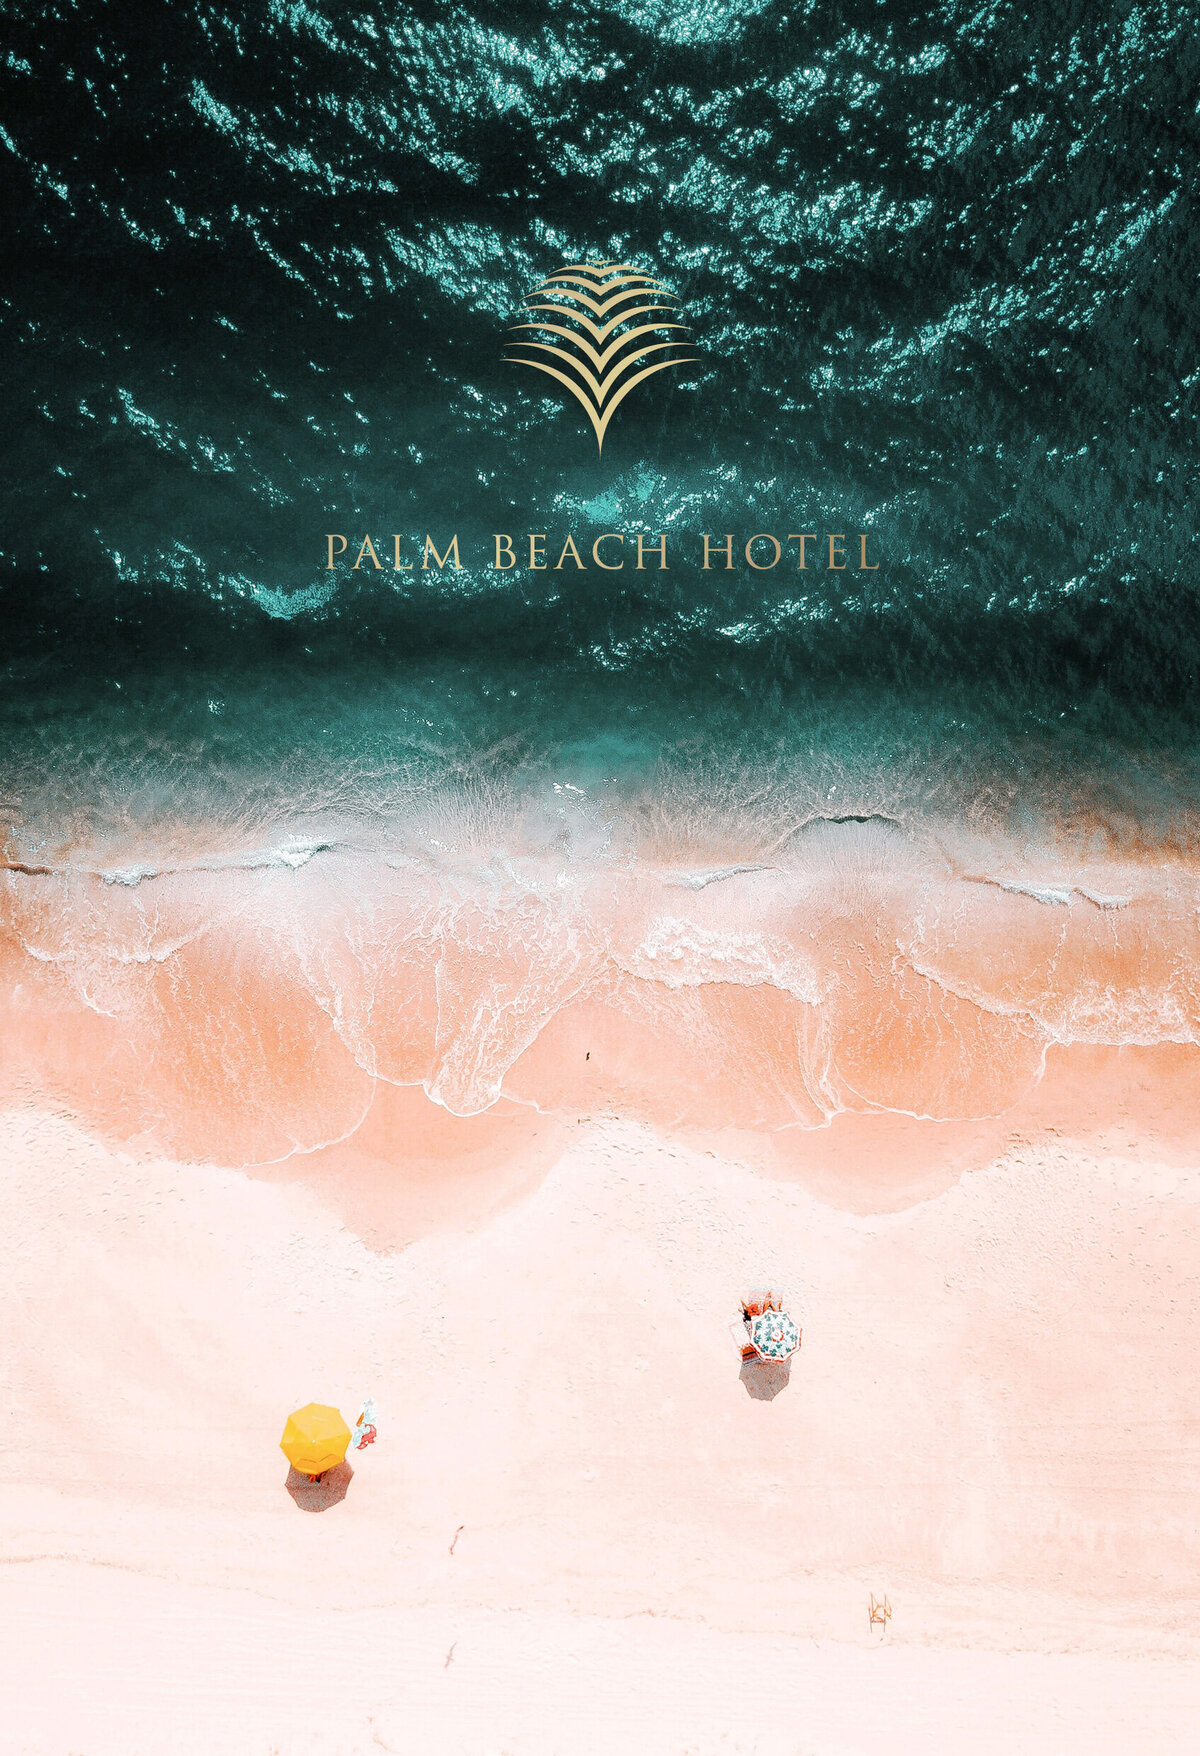 PBH custom deigned primary logo featuring palm leaf overlaid on shore image of Palm Beach.